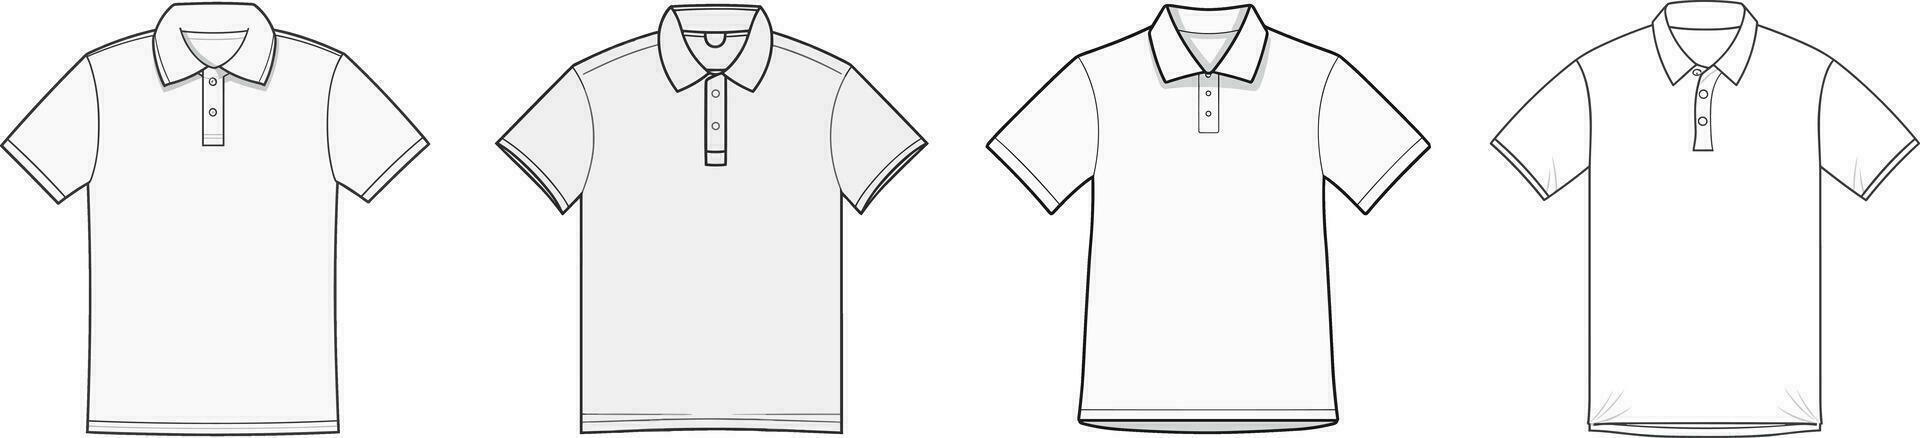 modelo camisa Bosquejo, vector ilustración plano diseño describir, aislado, blanco antecedentes